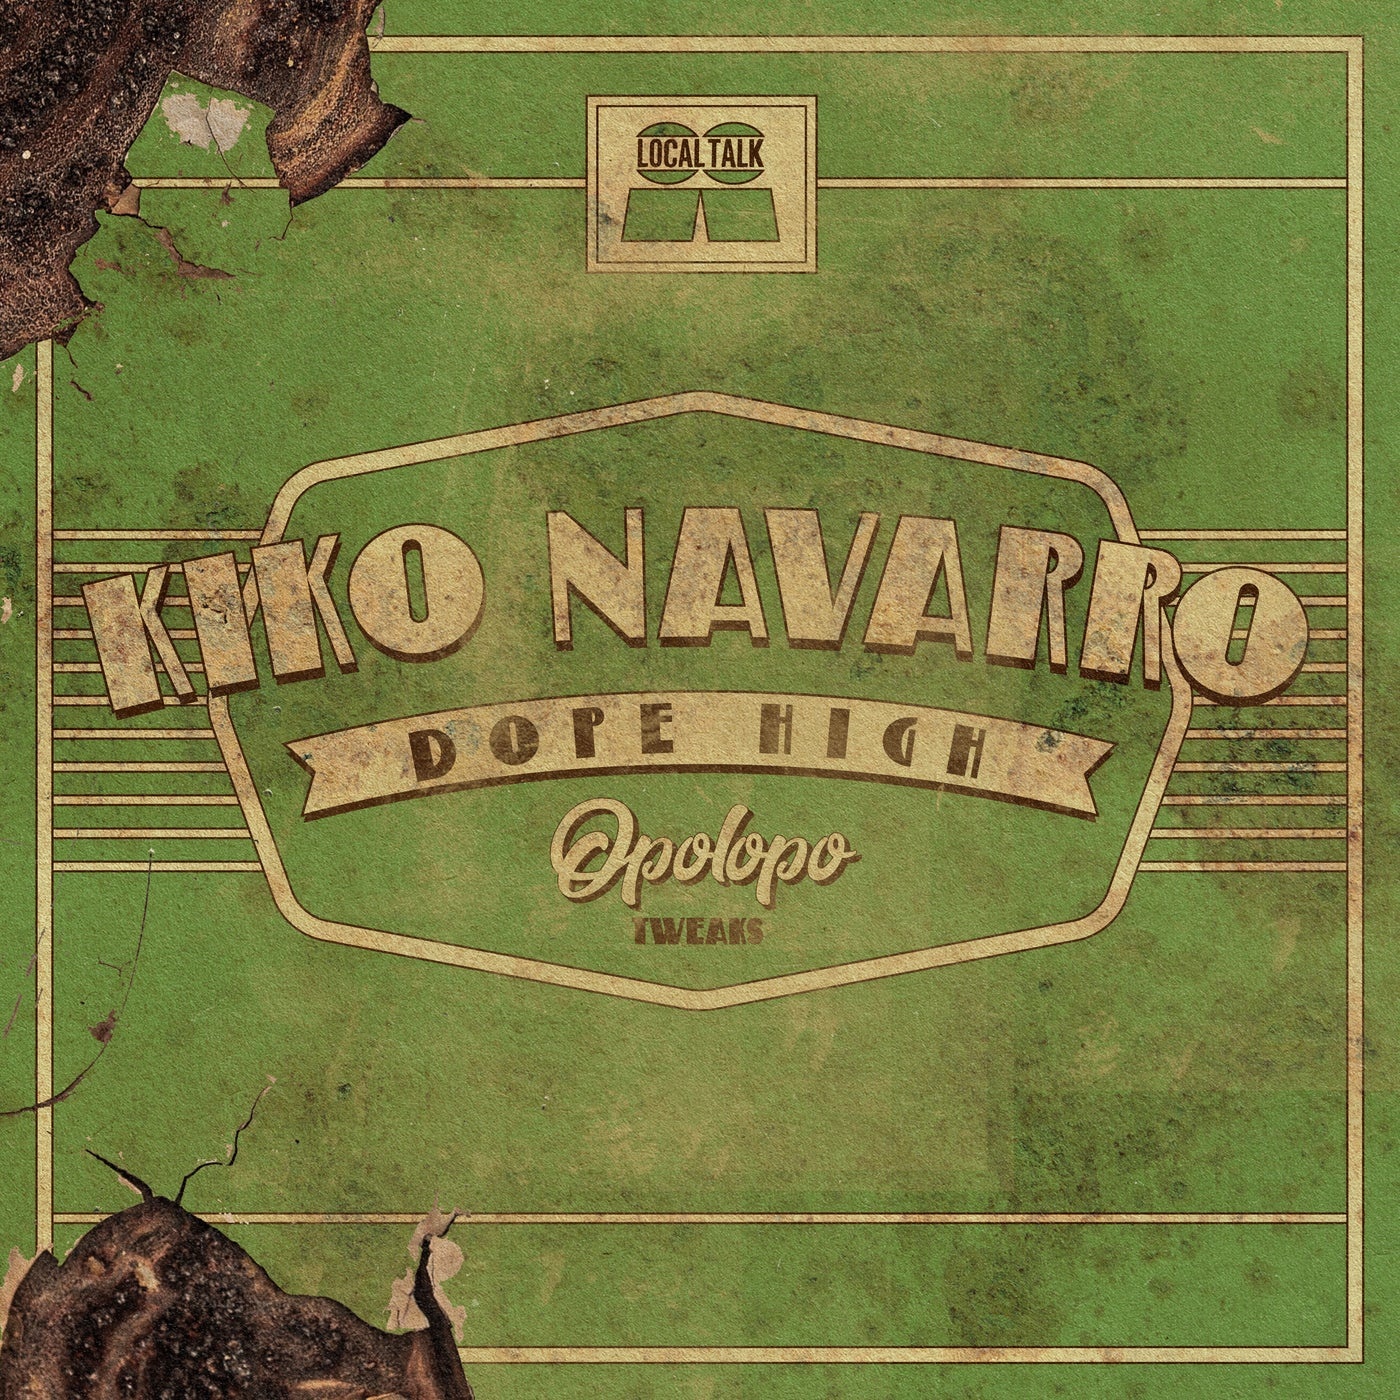 Kiko Navarro - Dope High (OPOLOPO Tweak) [OTW3]